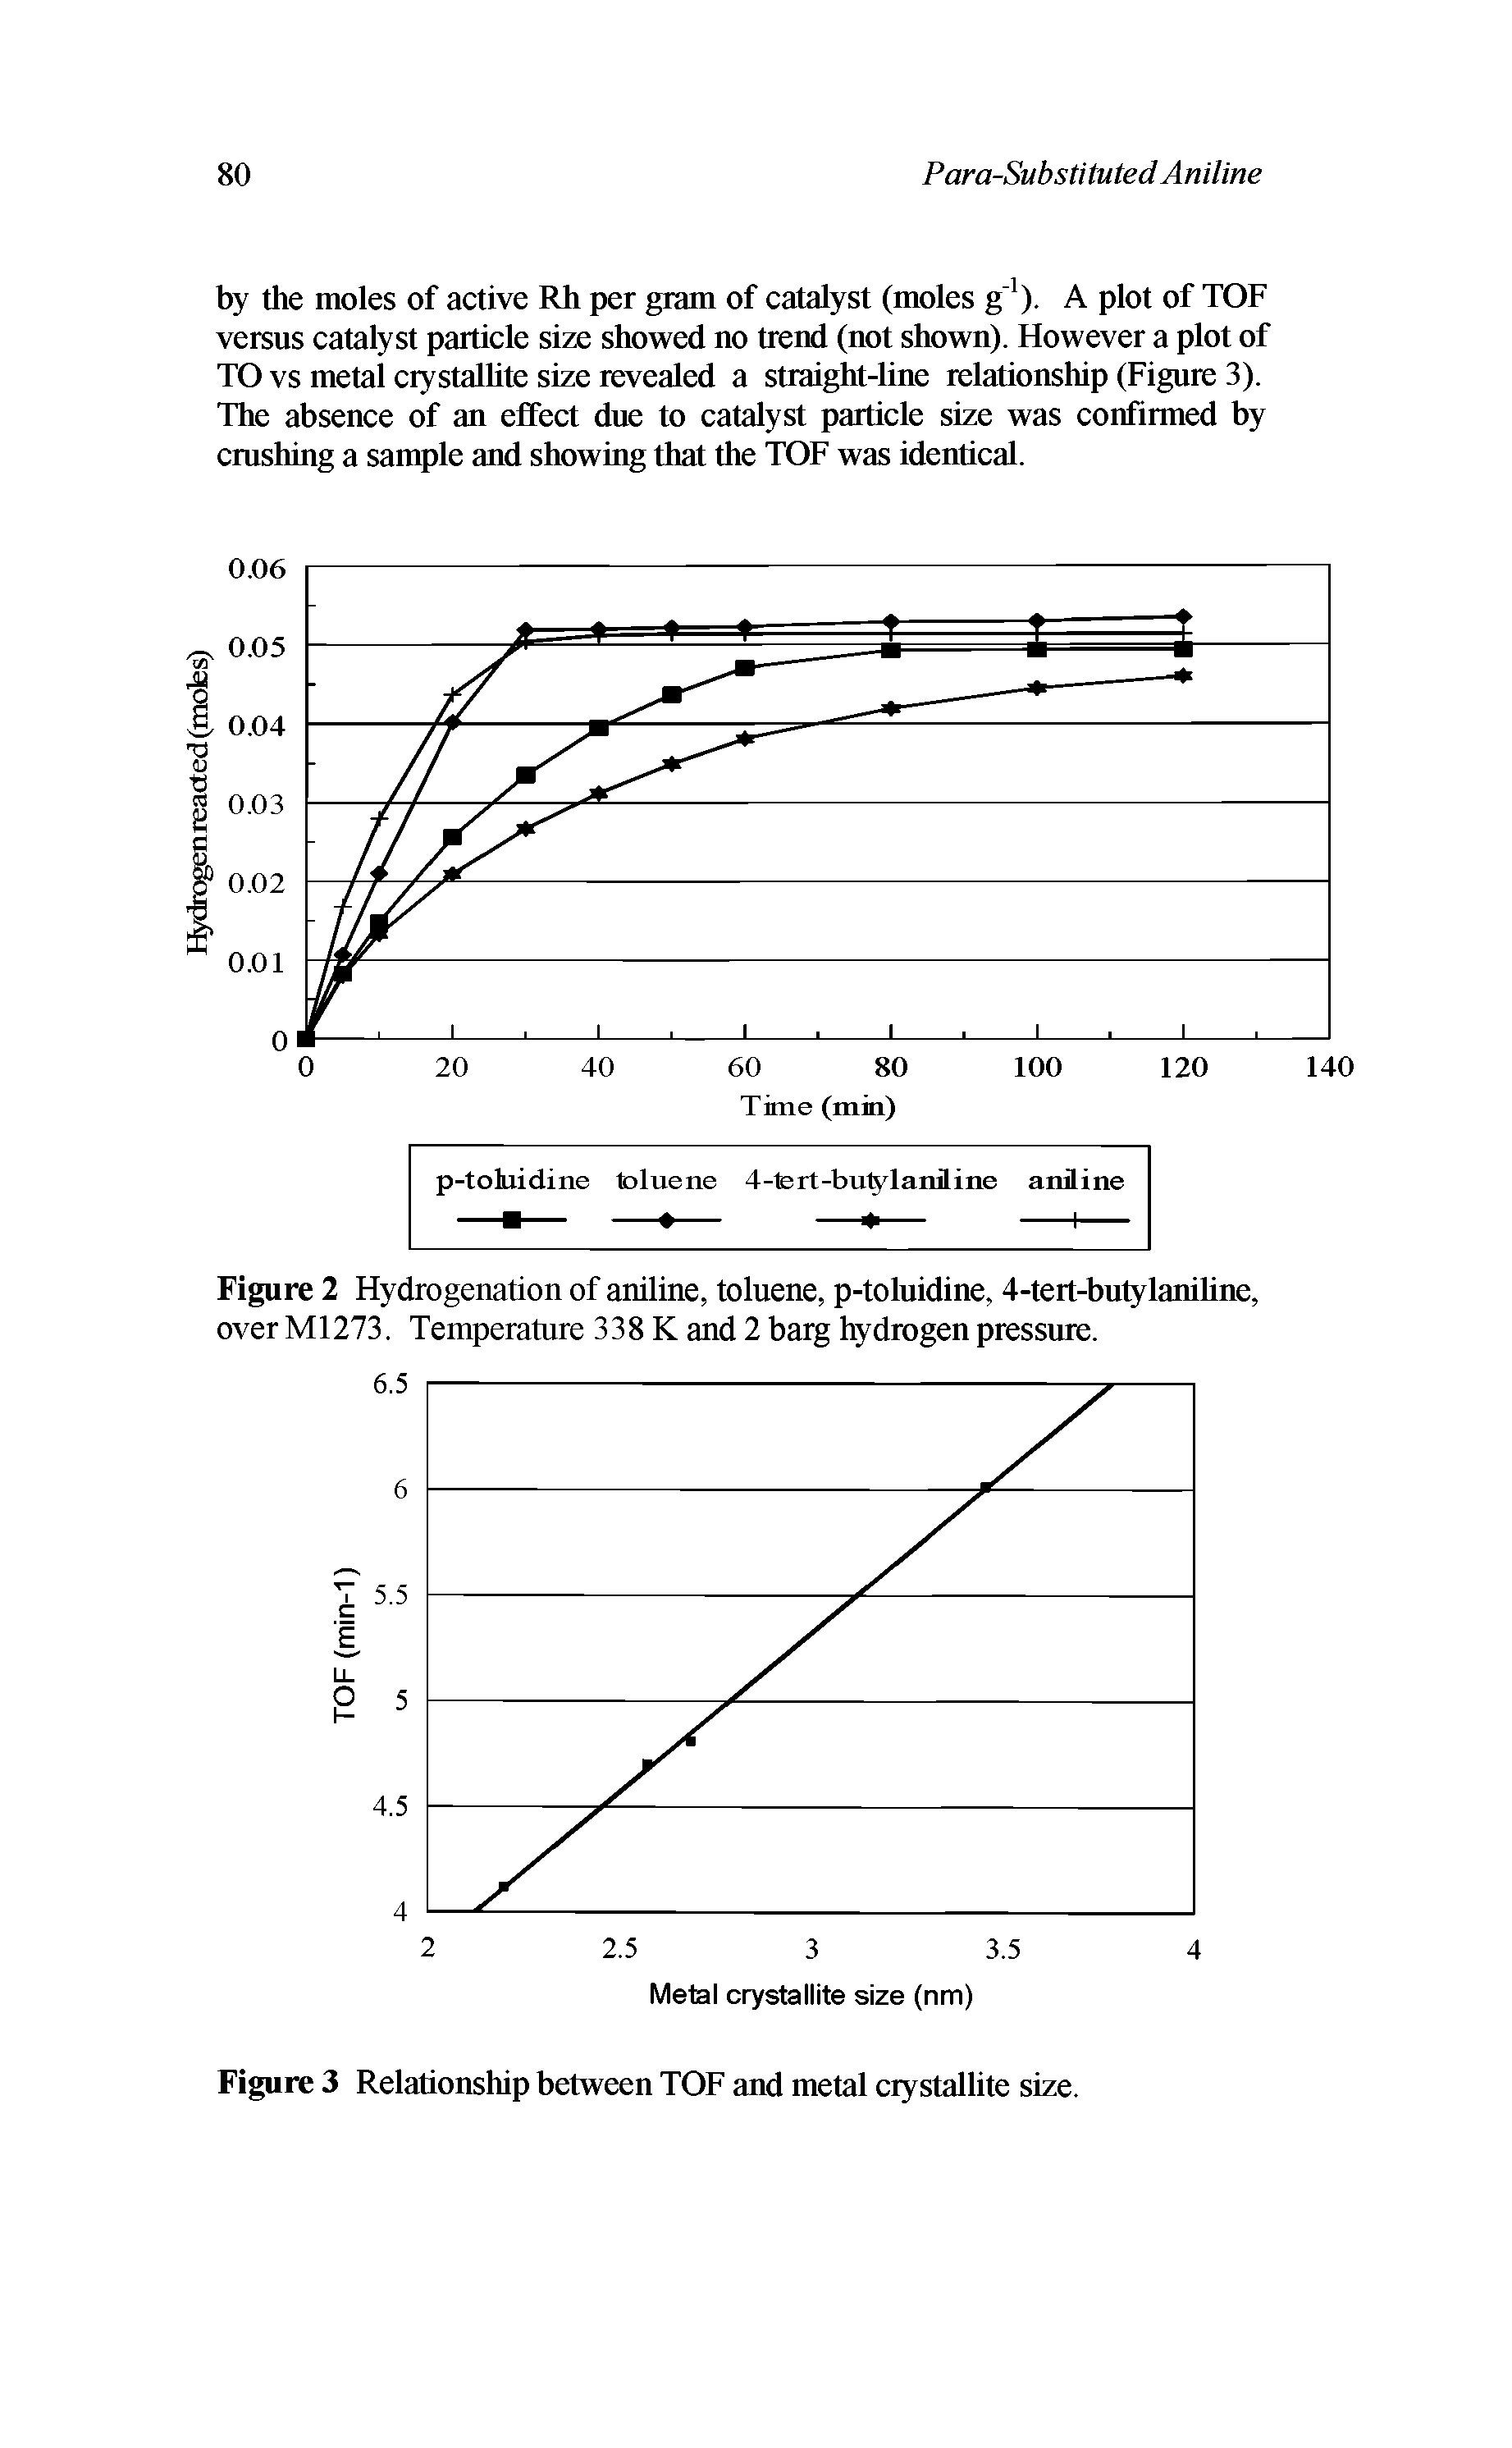 Figure 3 Relationship between TOF and metal crystallite size.